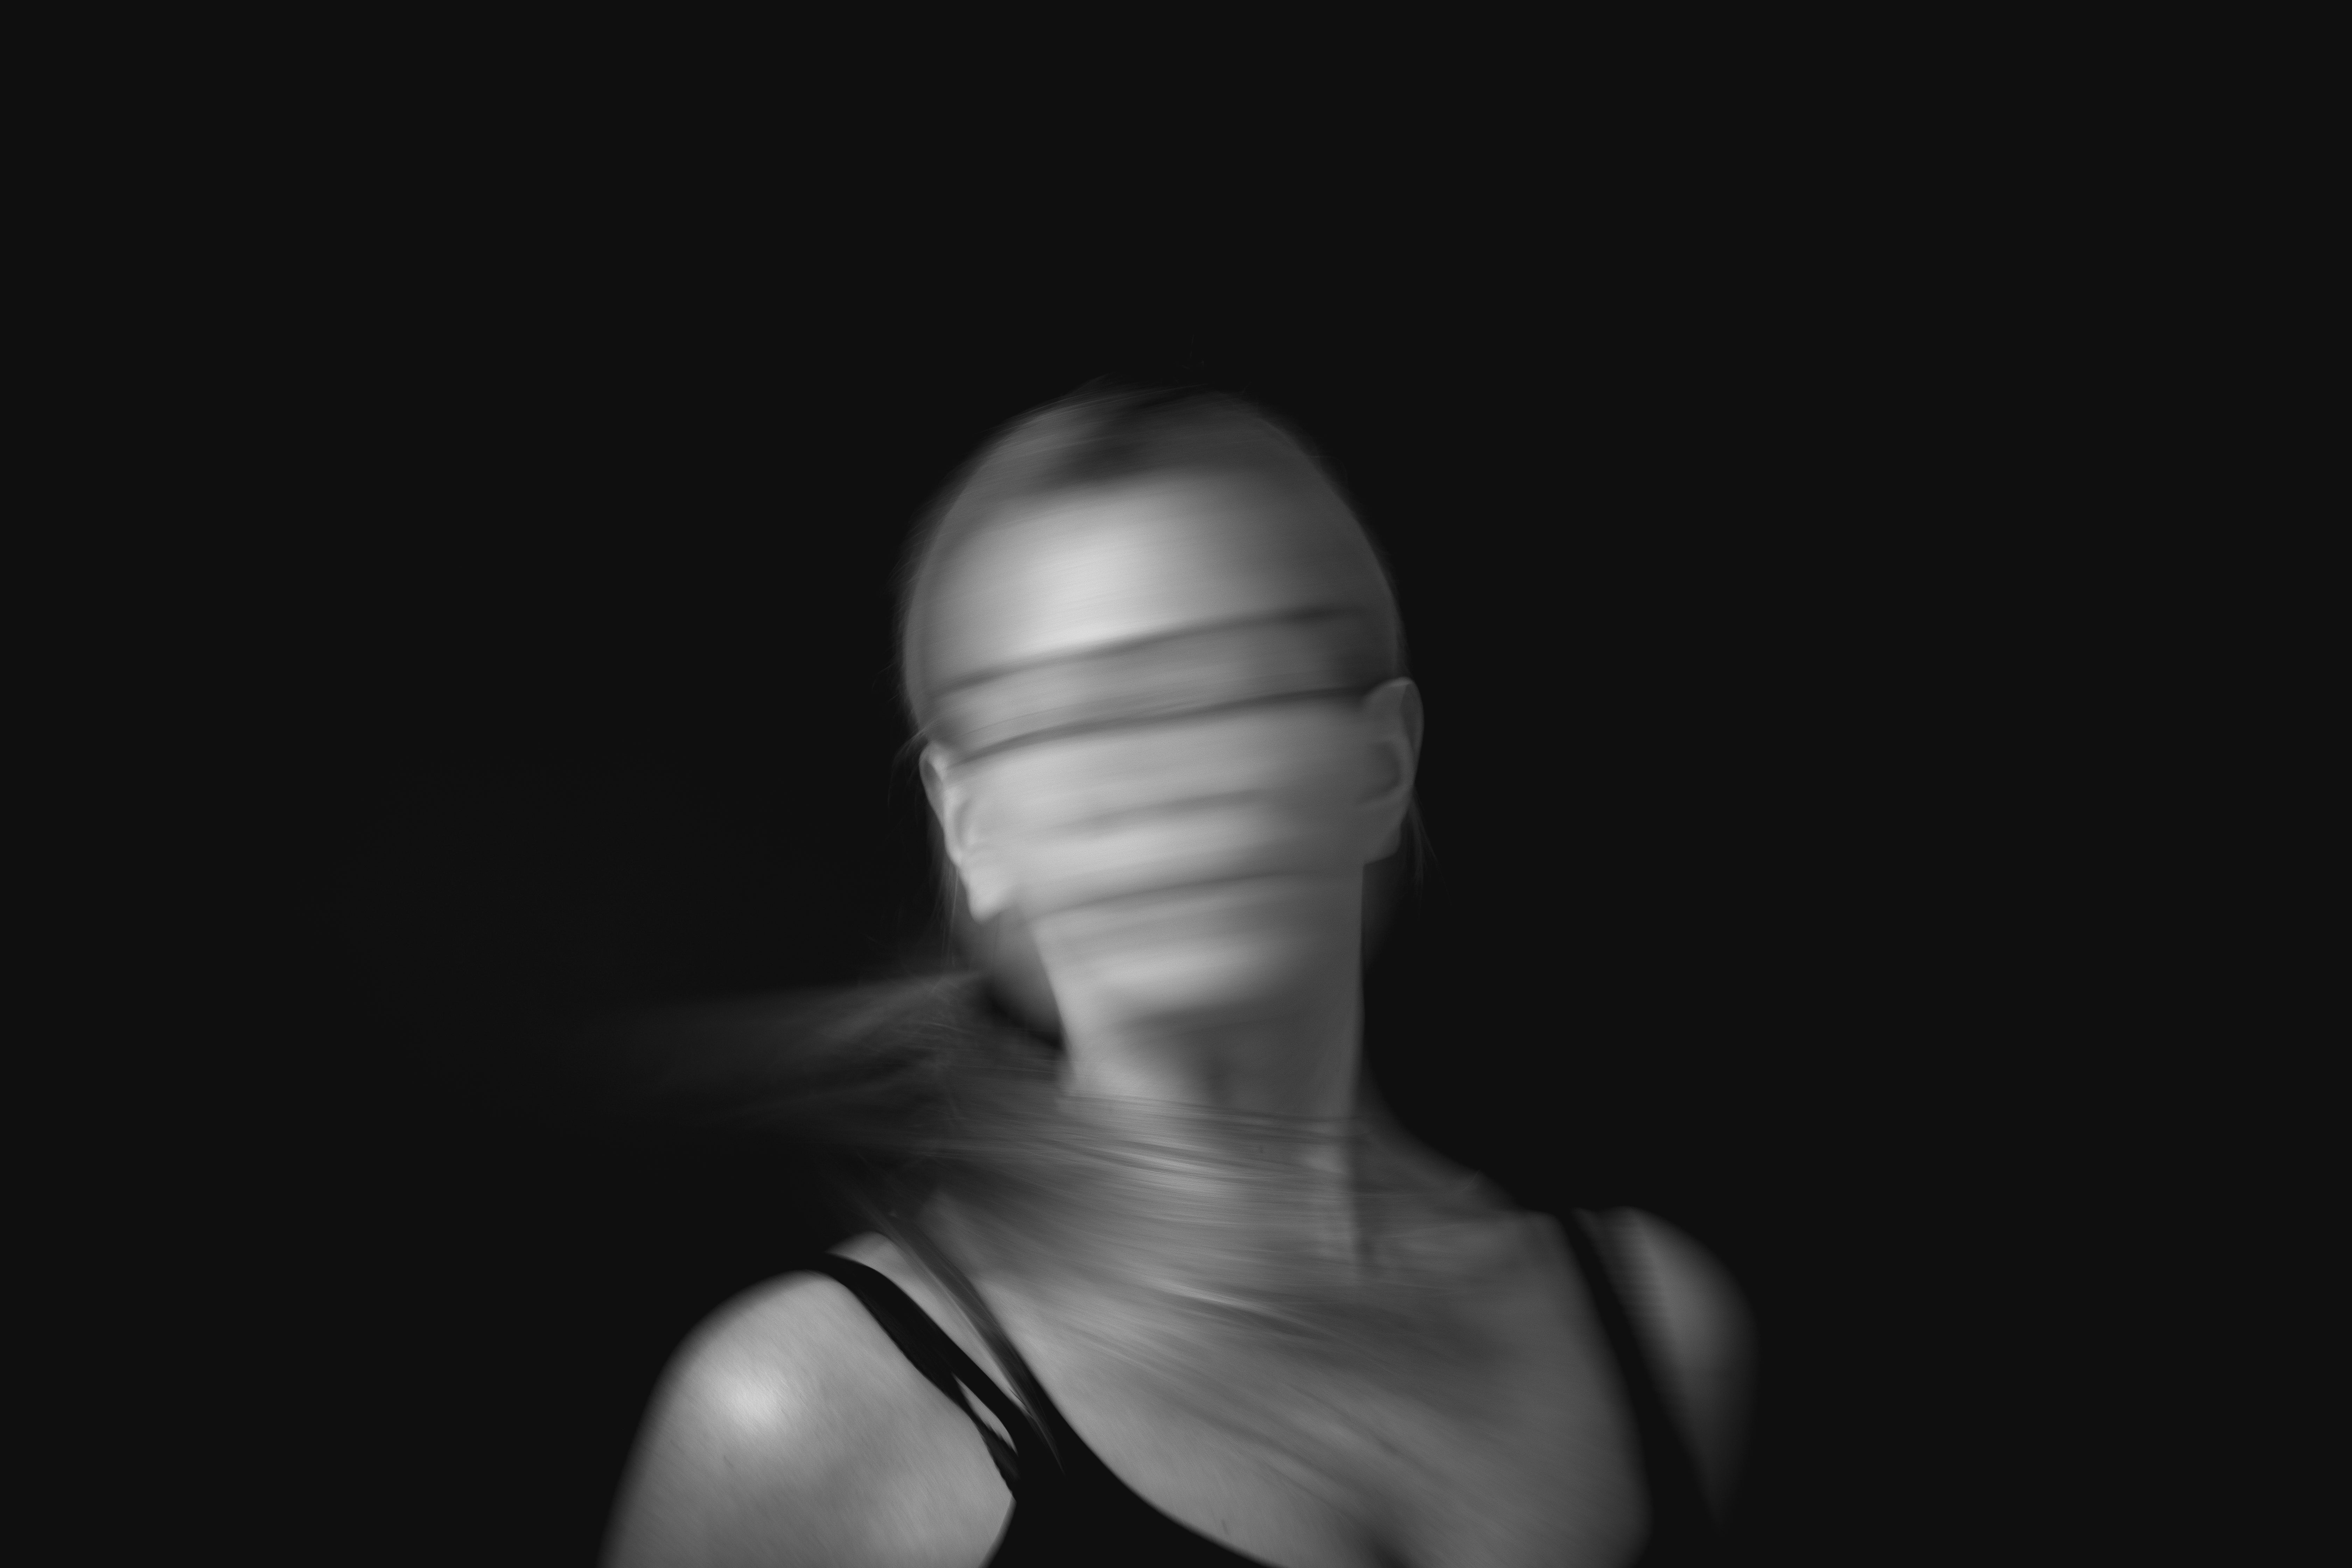 https://burst.shopifycdn.com/photos/a-person-moving-their-head-creating-motion-blur.jpg?exif=0&iptc=0